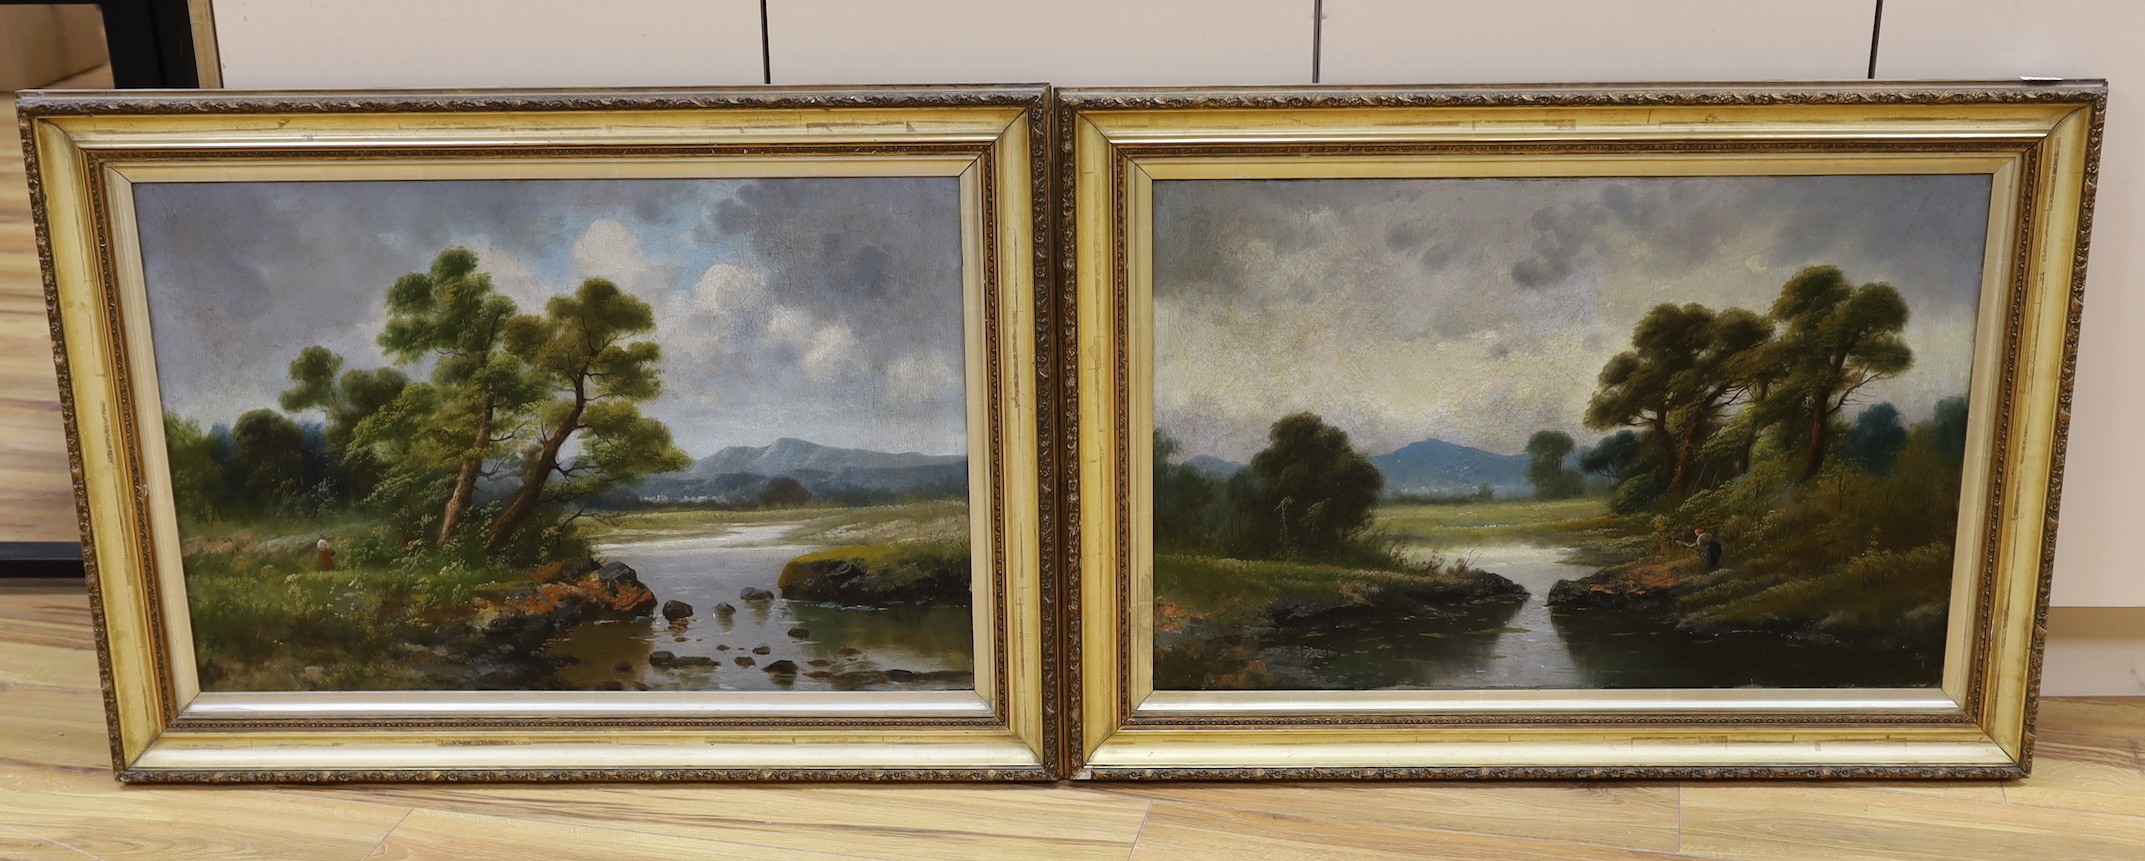 English School c.1900, pair of oils on canvas, River landscapes, 50 x 76cm